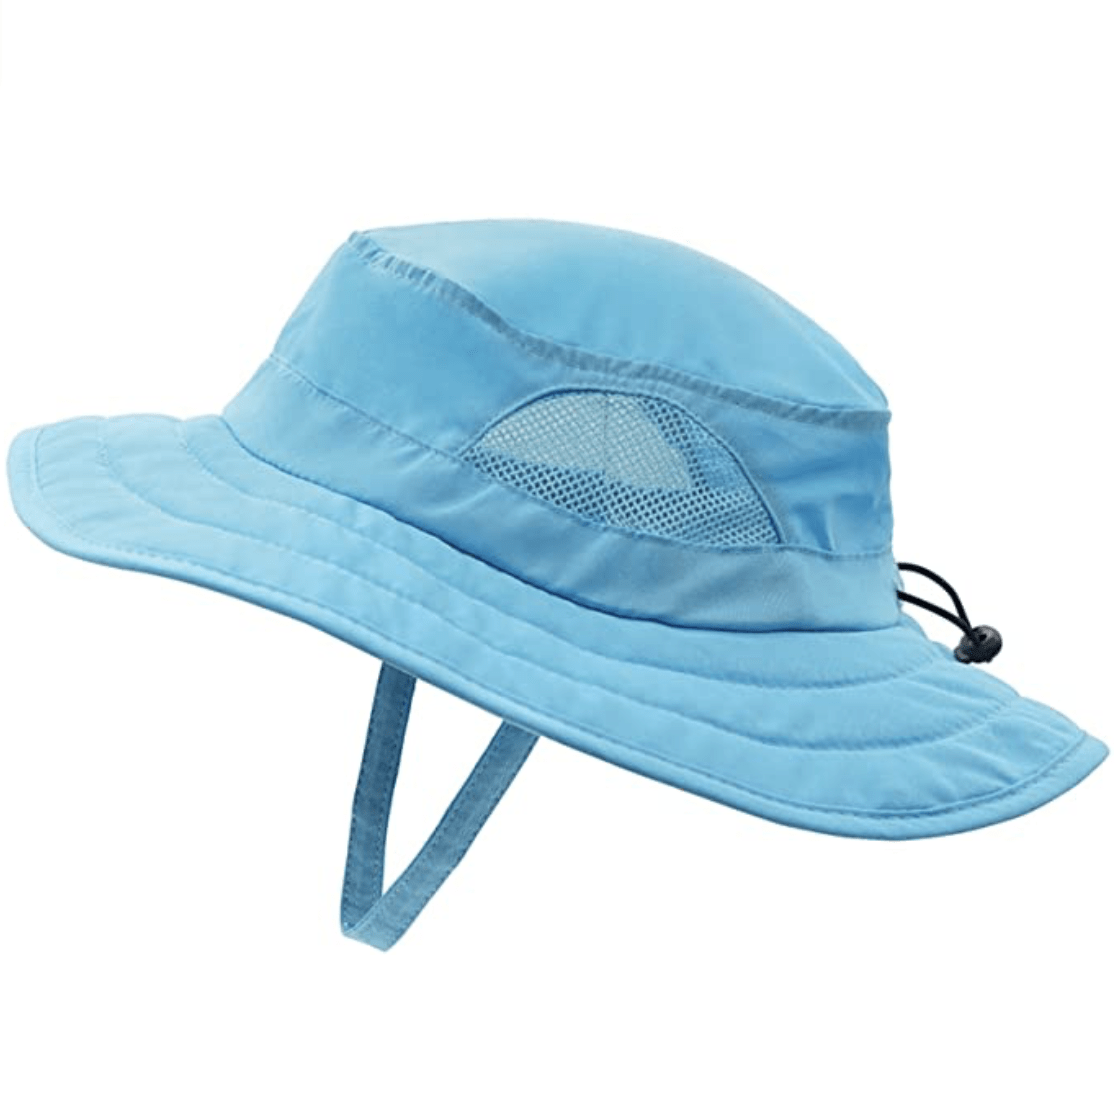 Lubier 1 PC Bucket Hat Fisherman Outdoor Cap Fashionable Unisex Summer Sun Hats Foldable Wide Side Bush Hats Maple Leaf Print Cap